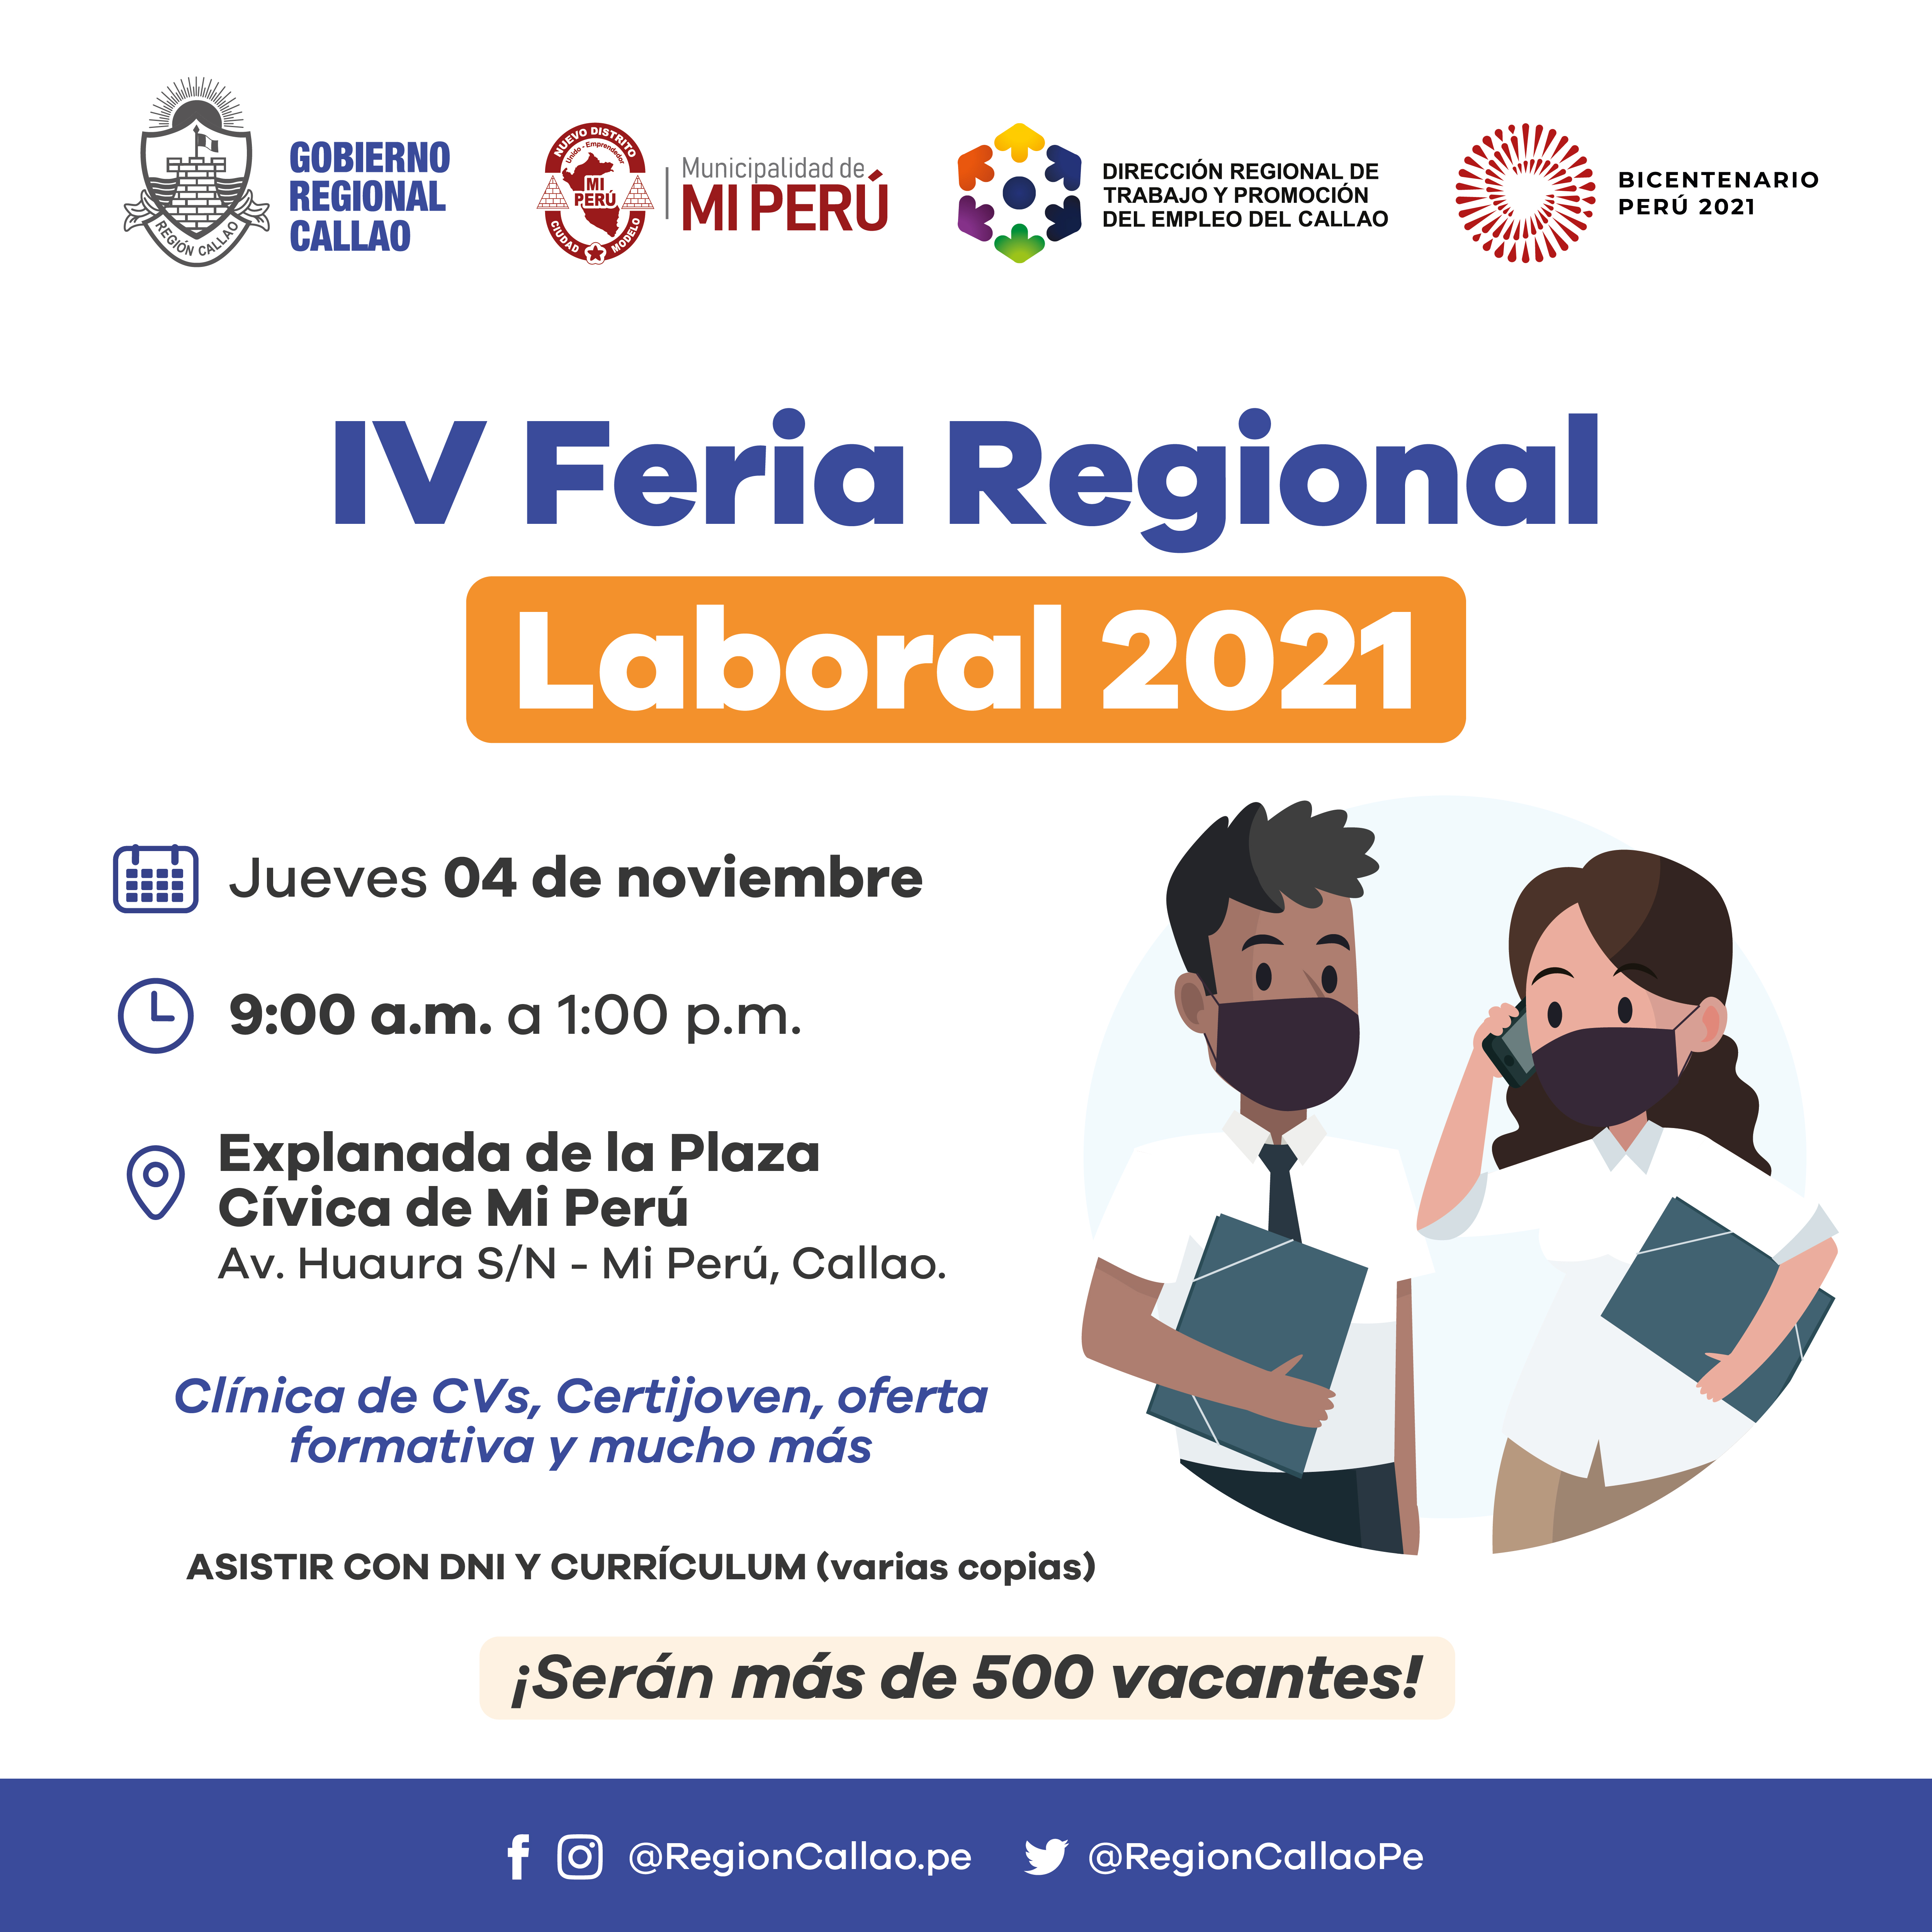 IV FERIA REGIONAL LABORAL 2021